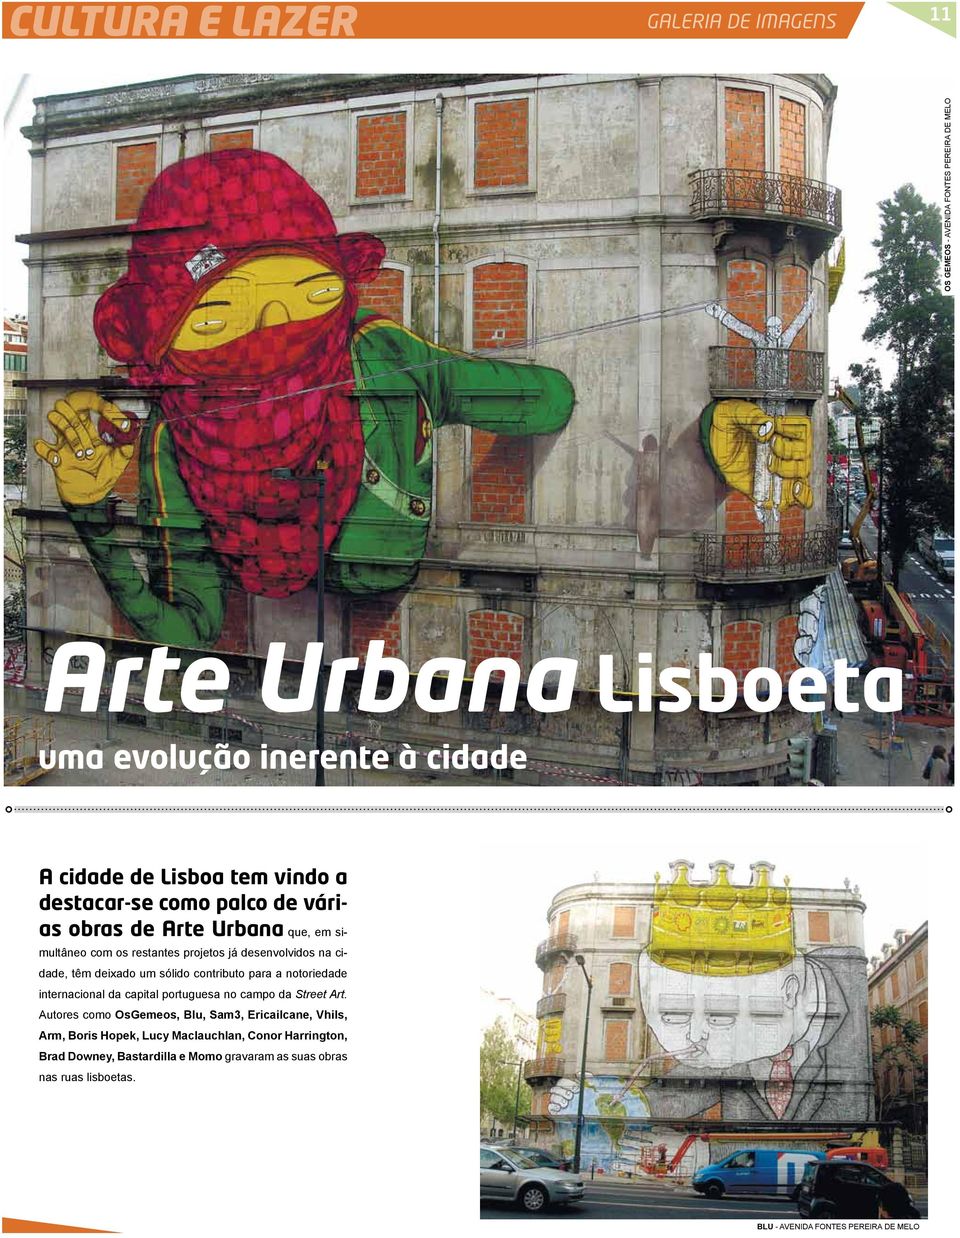 sólido contributo para a notoriedade internacional da capital portuguesa no campo da Street Art.